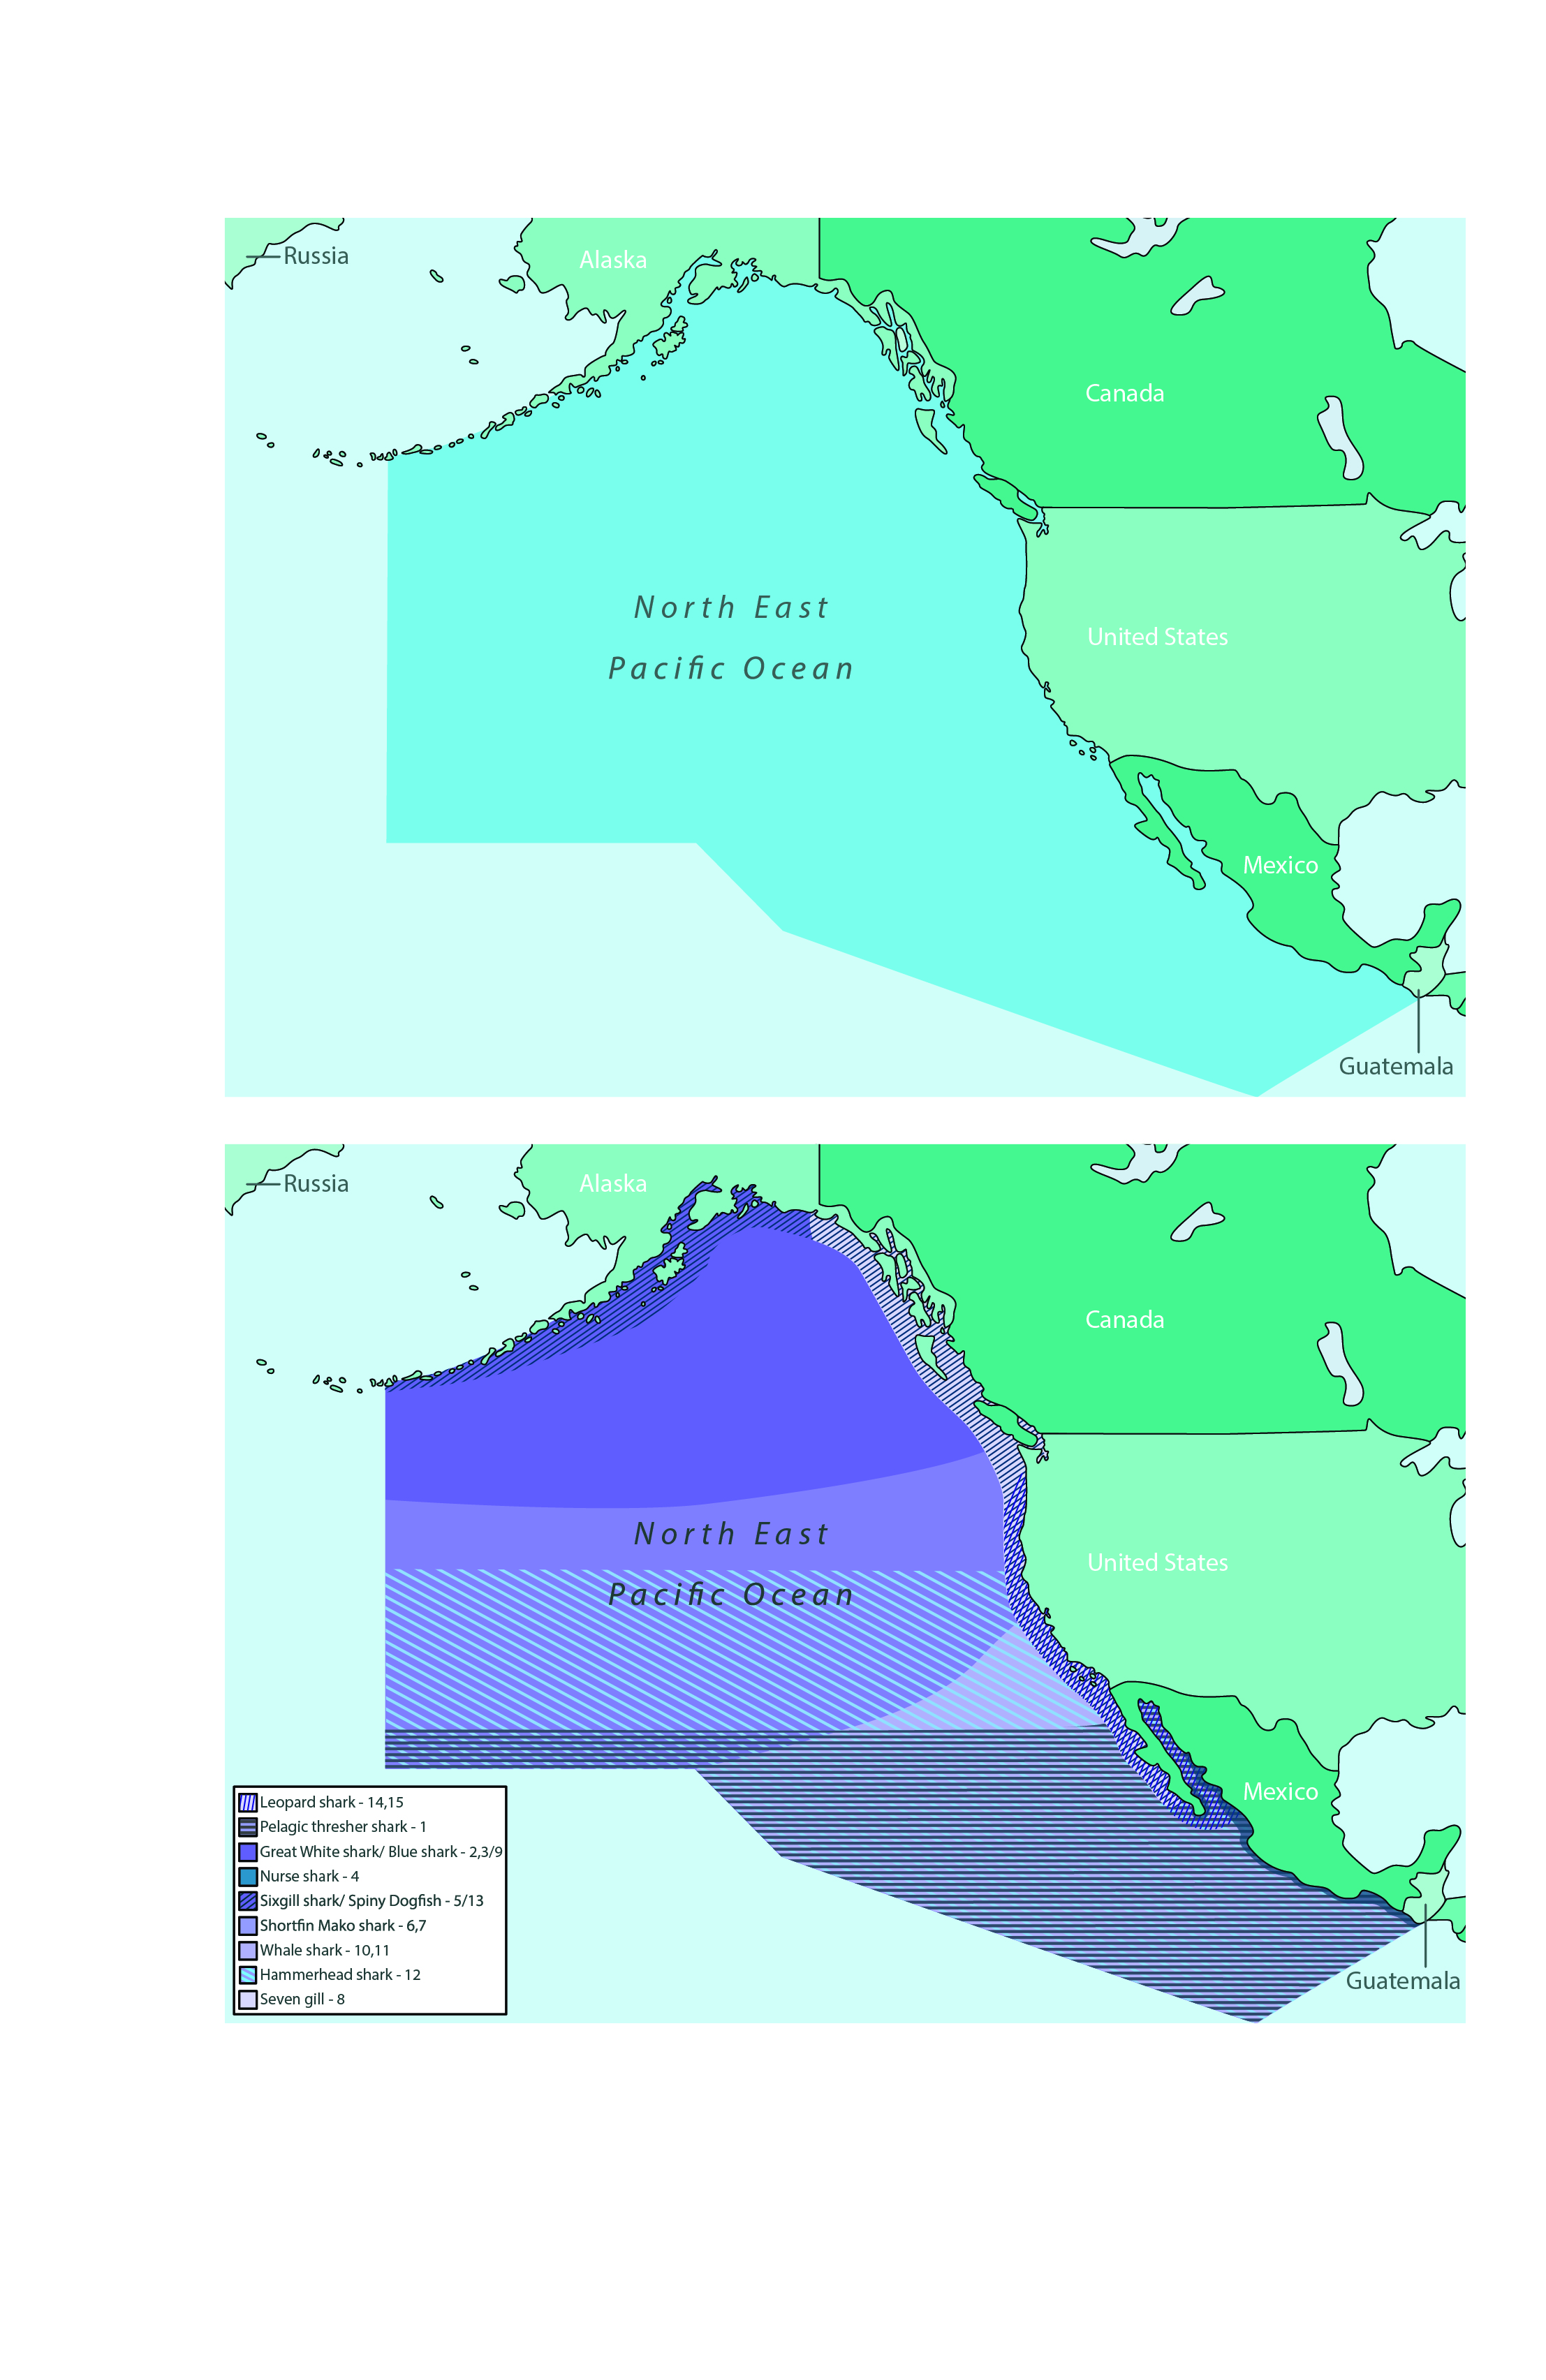 North East Pacific Ocean shark territory maps